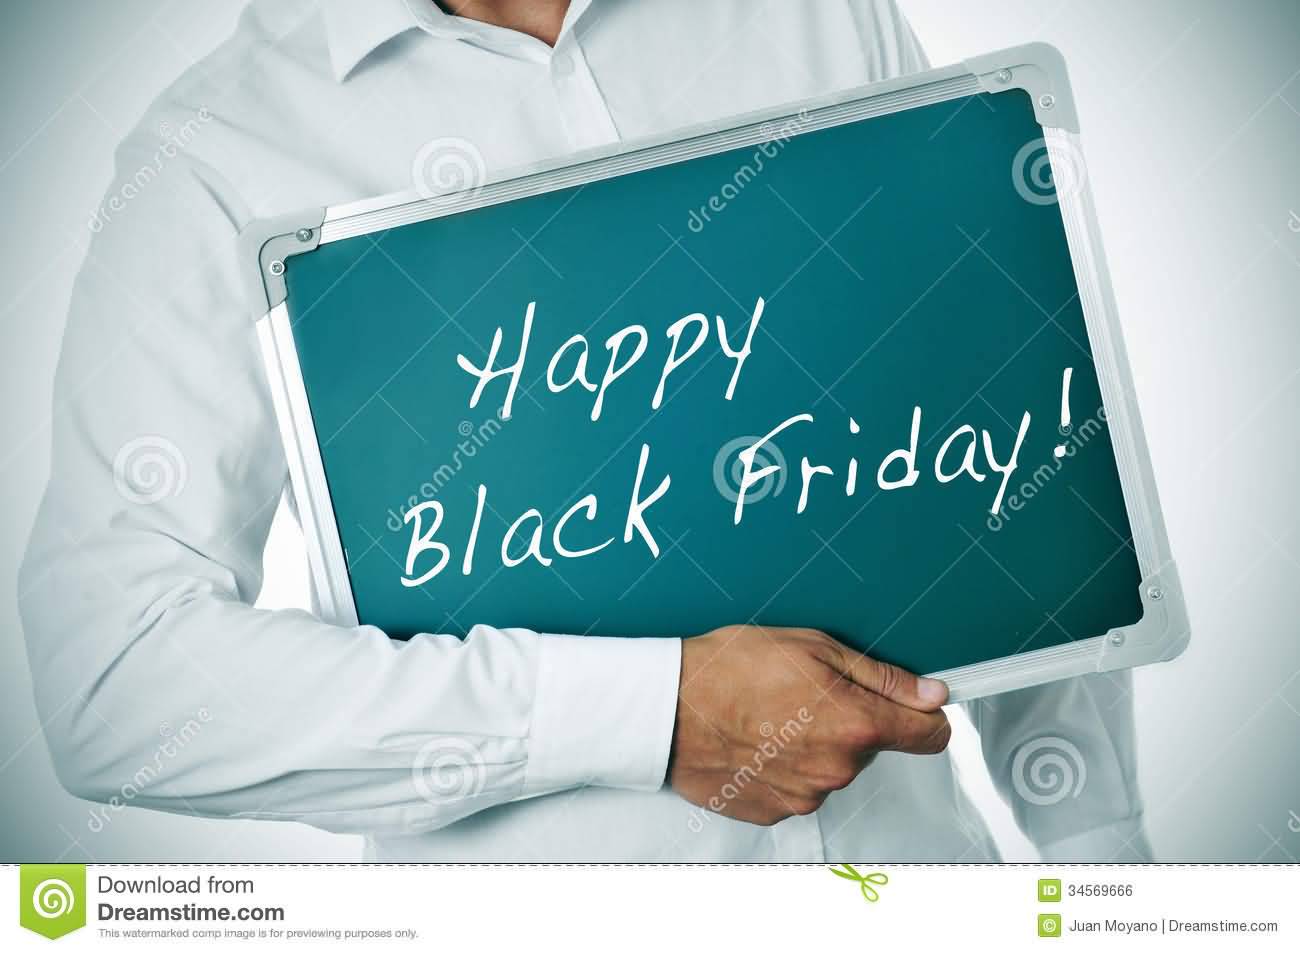 Man Showing Happy Black Friday Board